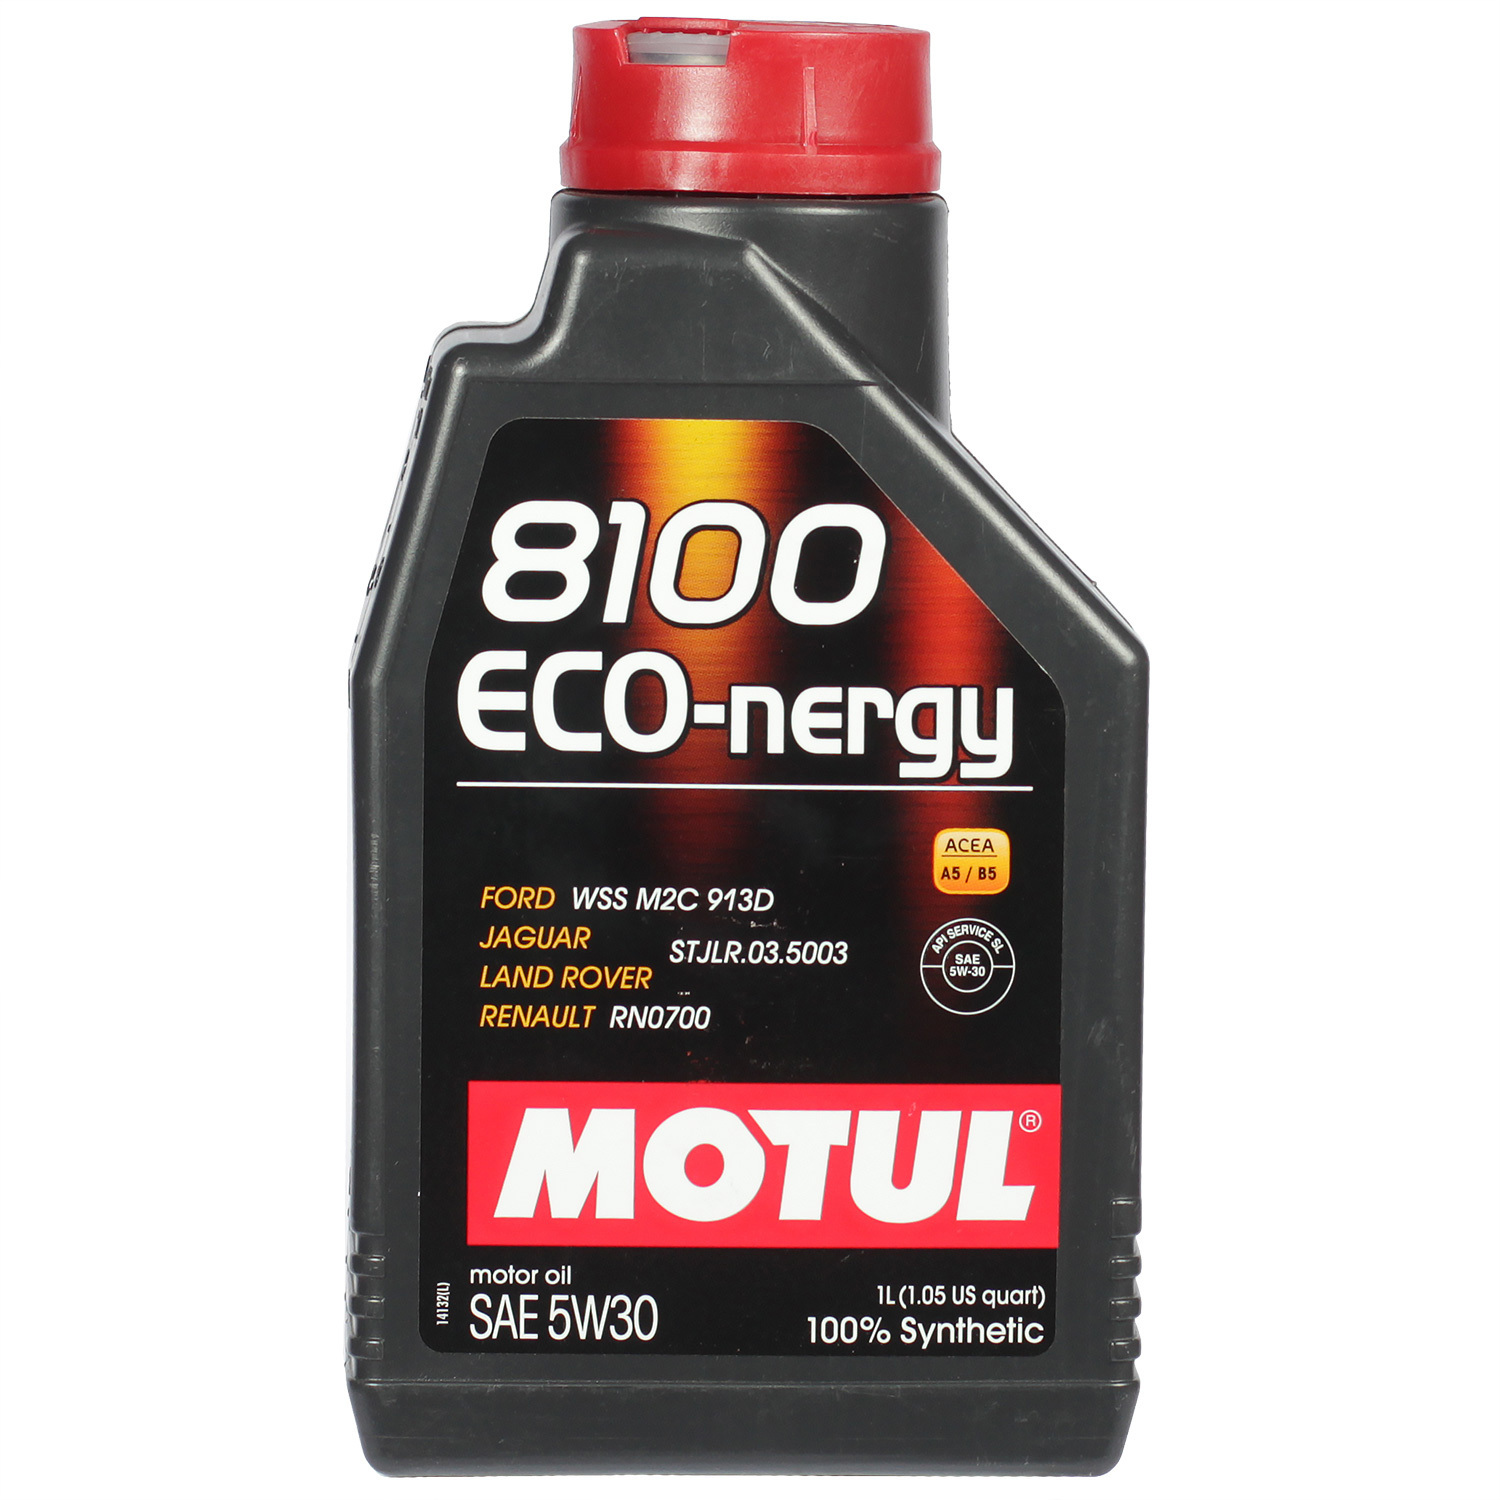 Motul Моторное масло Motul 8100 Eco-nergy 5W-30, 1 л motul моторное масло motul 8100 eco nergy 5w 30 1 л